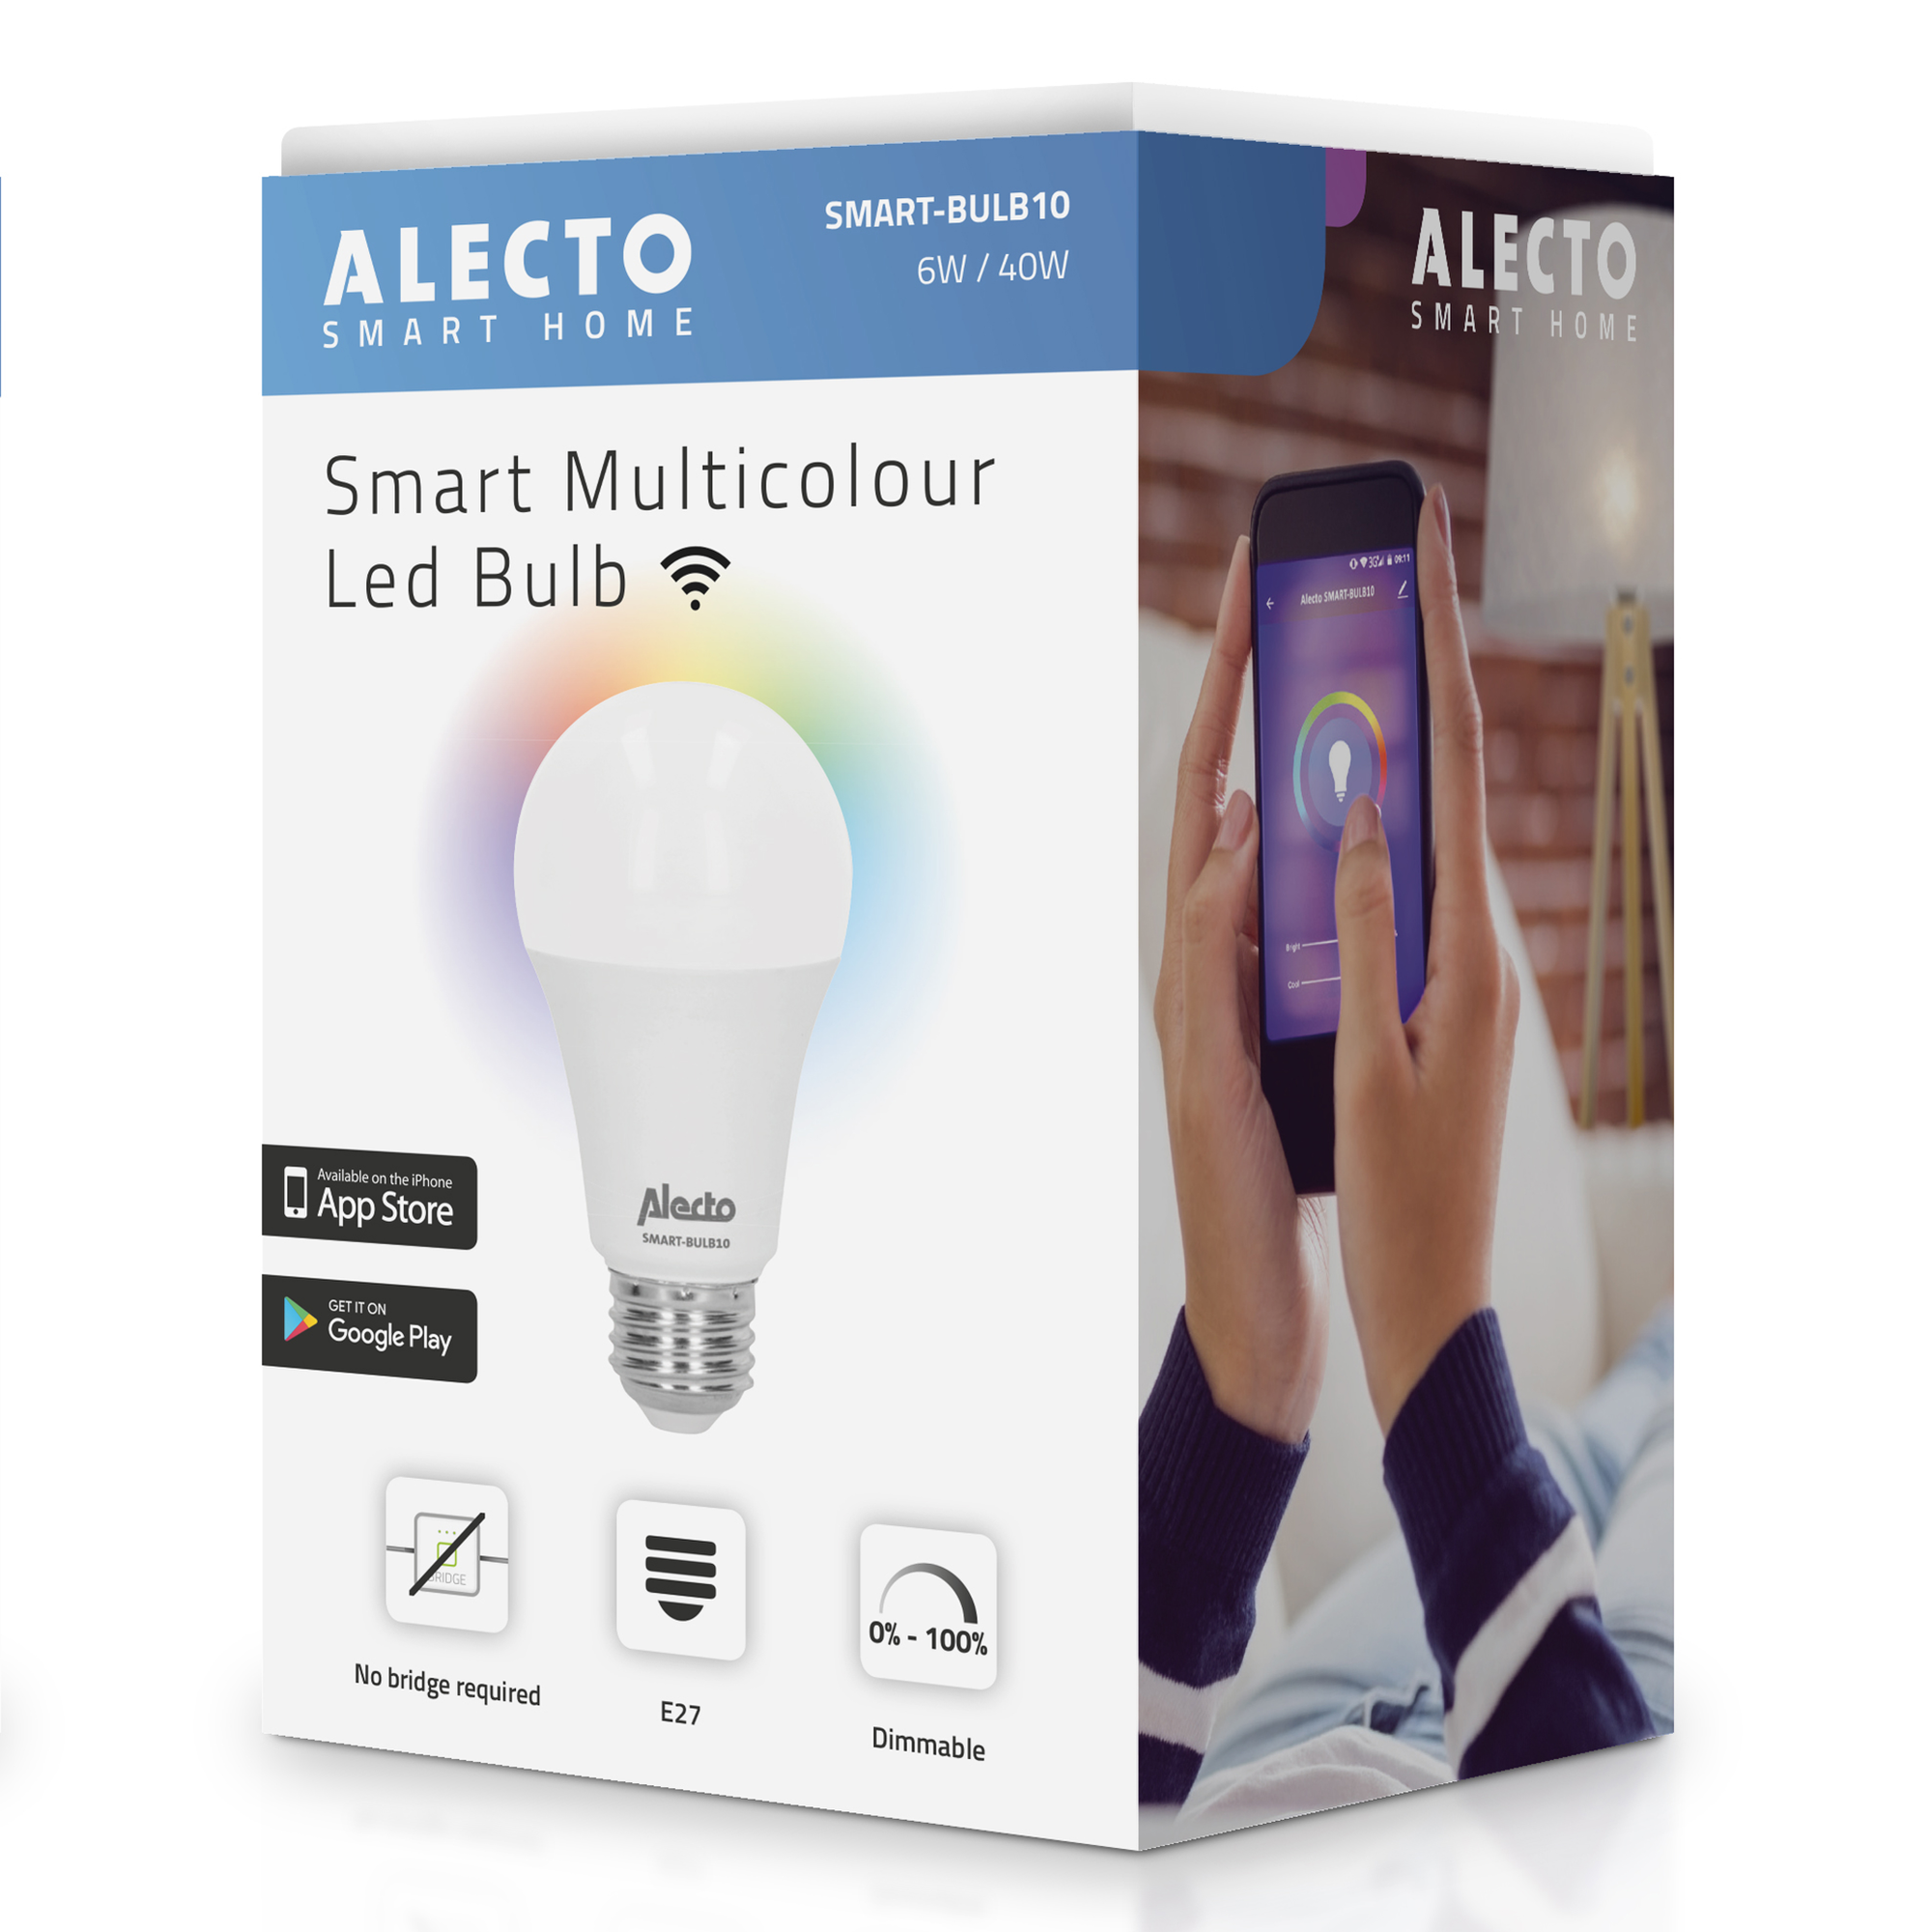 Weiß ALECTO smarte,mehrfarbige SMART-BULB10 Weiß,Neutrales mit Weiß,Warmes Kaltes warmes Weiß,RGB,Sehr E27-Sockel - WLAN-LED-Glühlampe